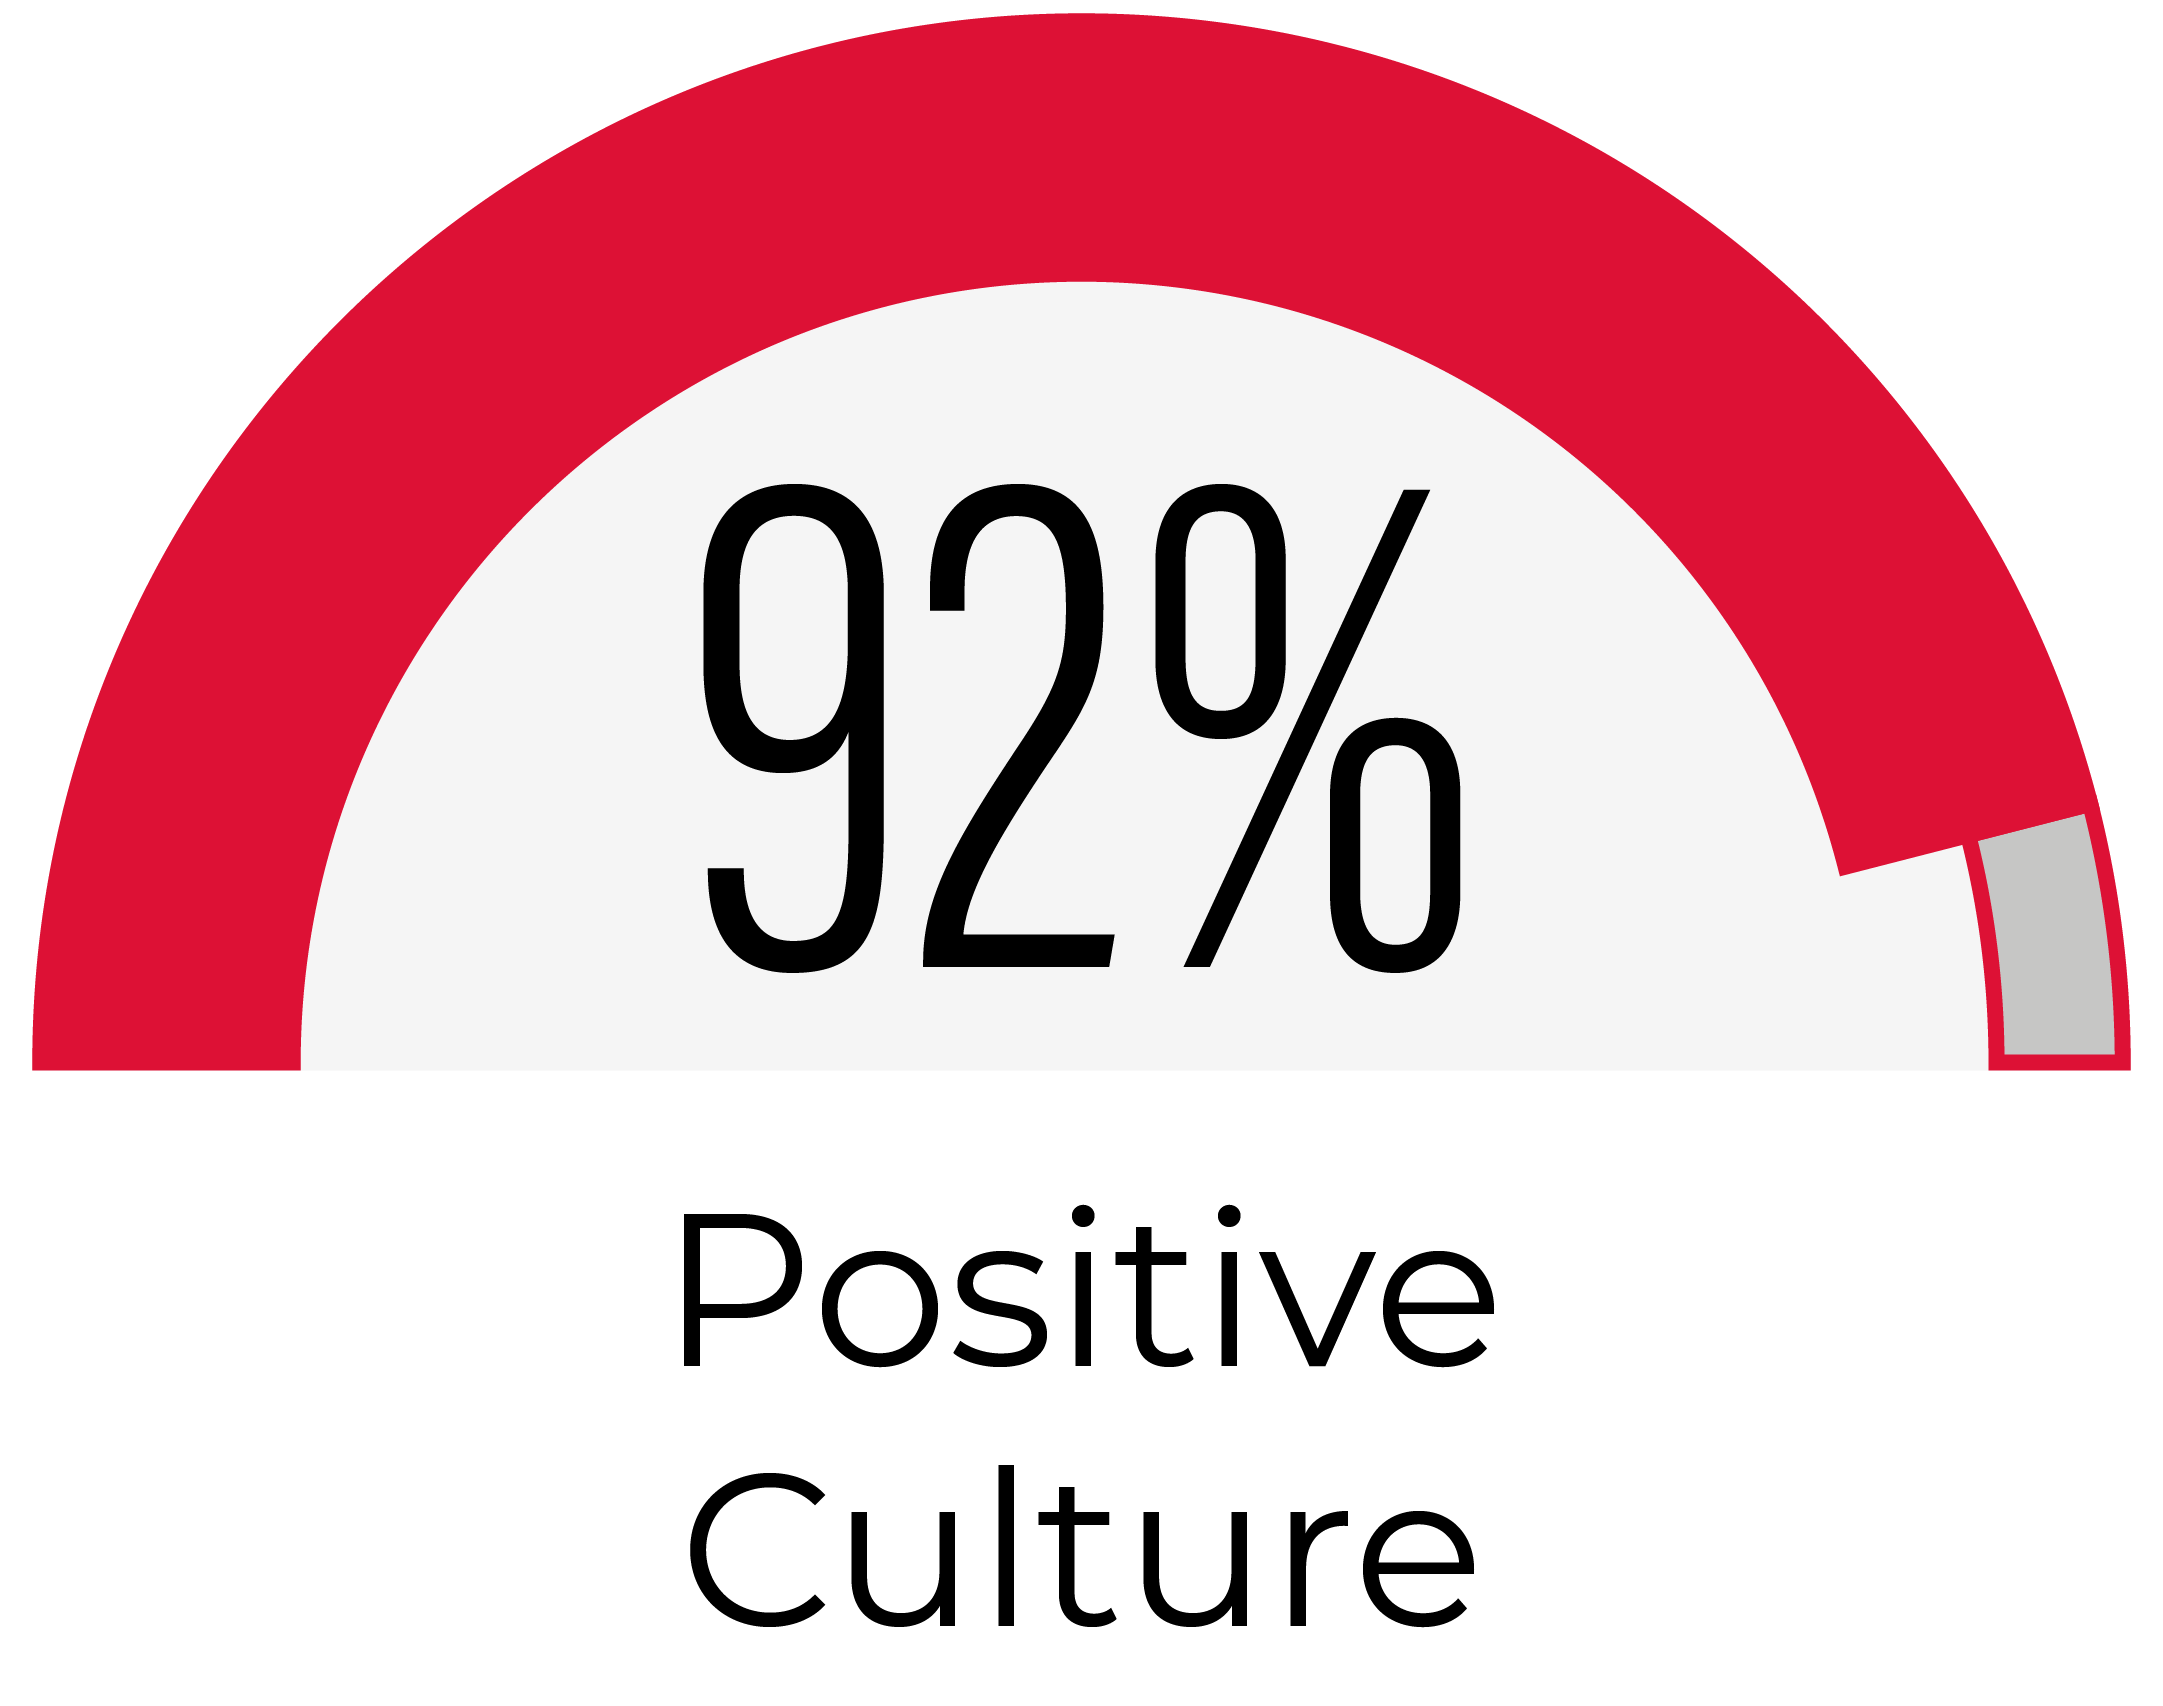 Percentage Icons_92 Positive